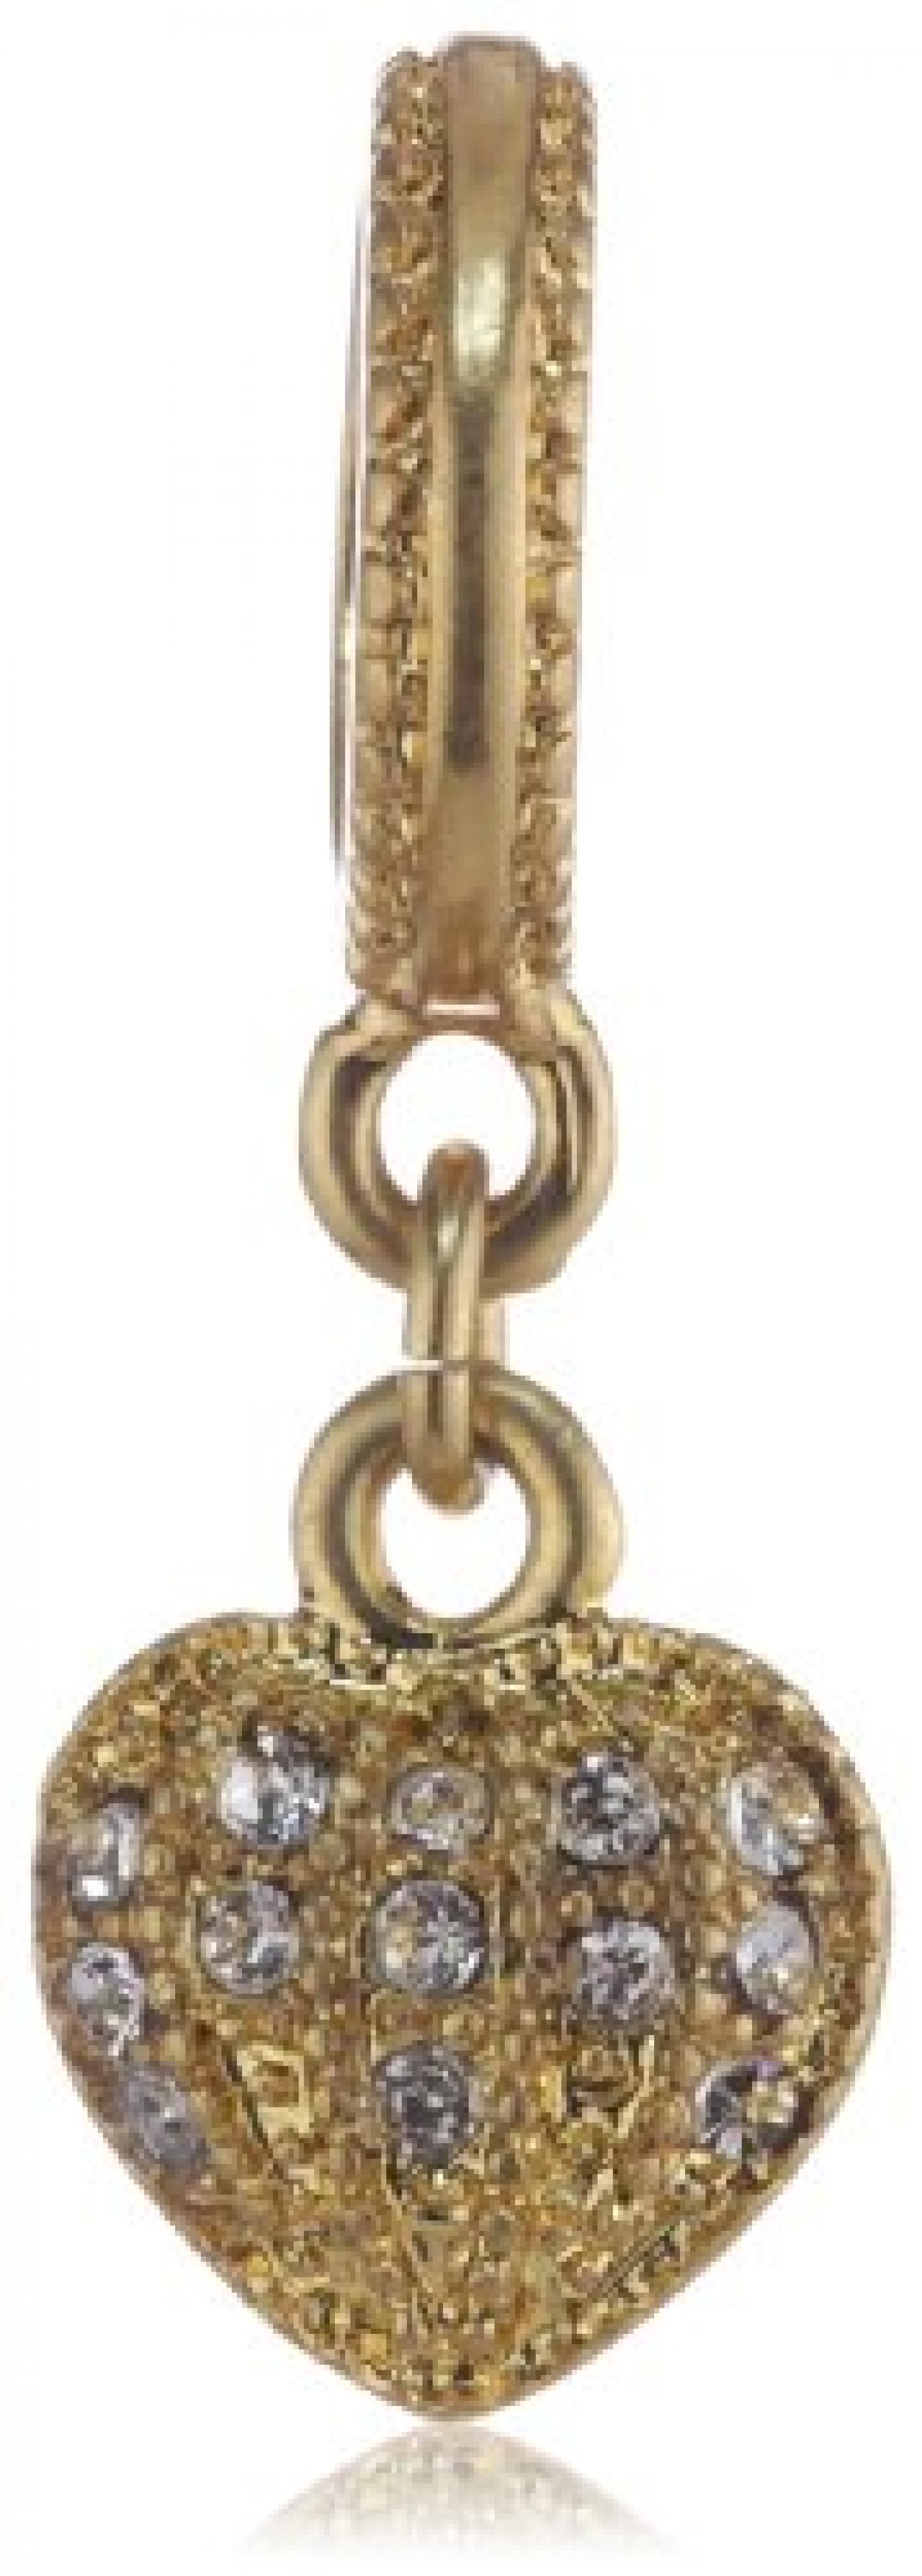 Pilgrim Jewelry Damen-Anhänger aus der Serie Charming vergoldet kristall 6.5 cm 421232009 